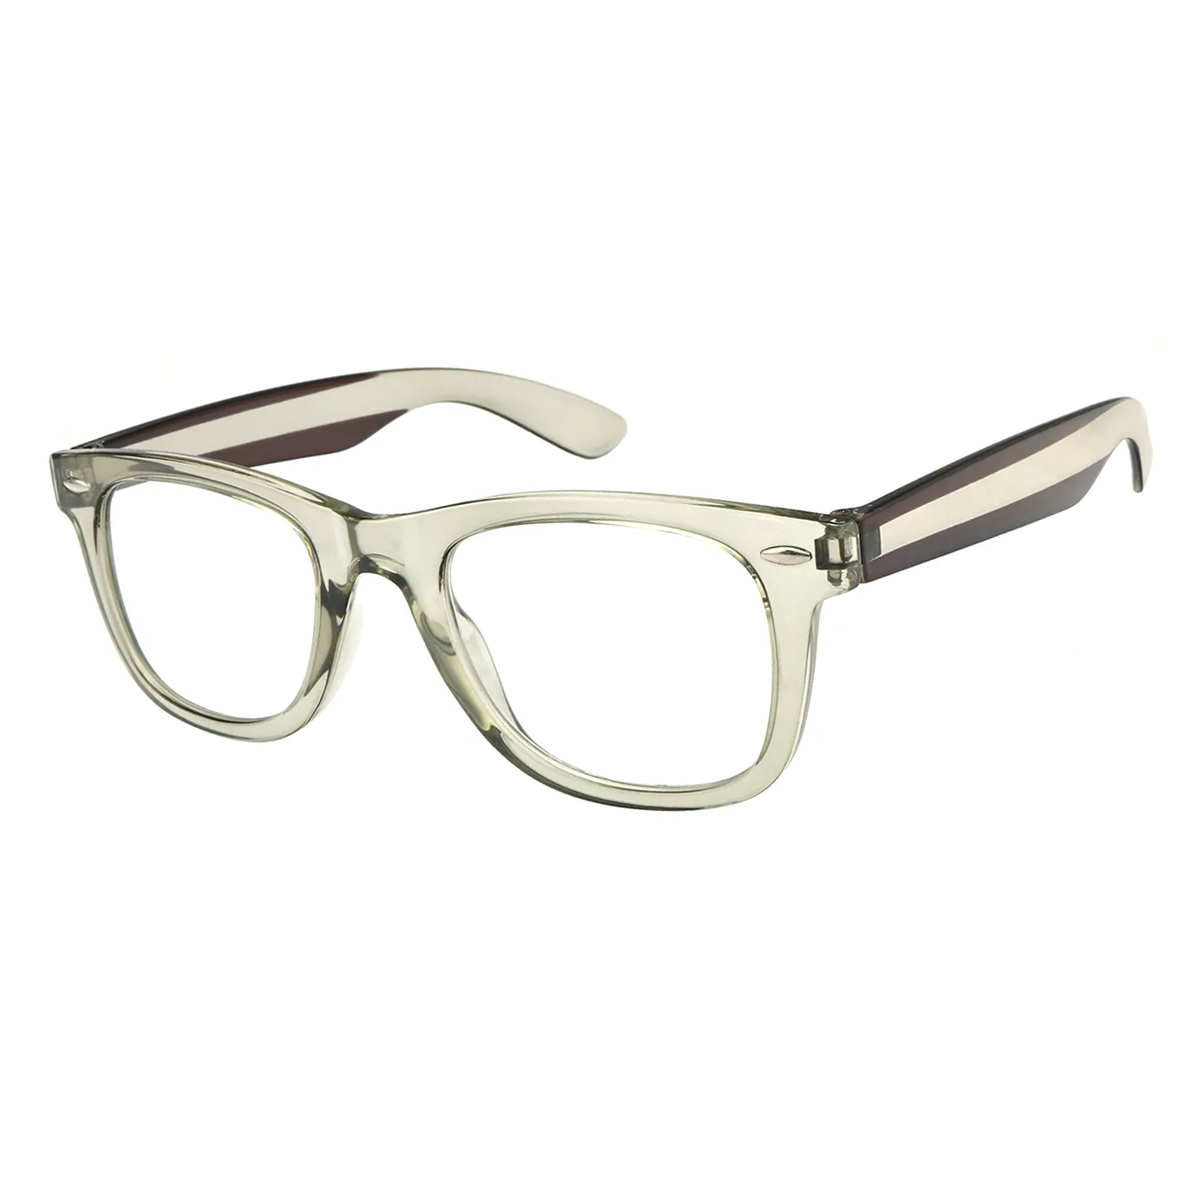 Boho - Square Transparent-Brown Reading Glasses for Women